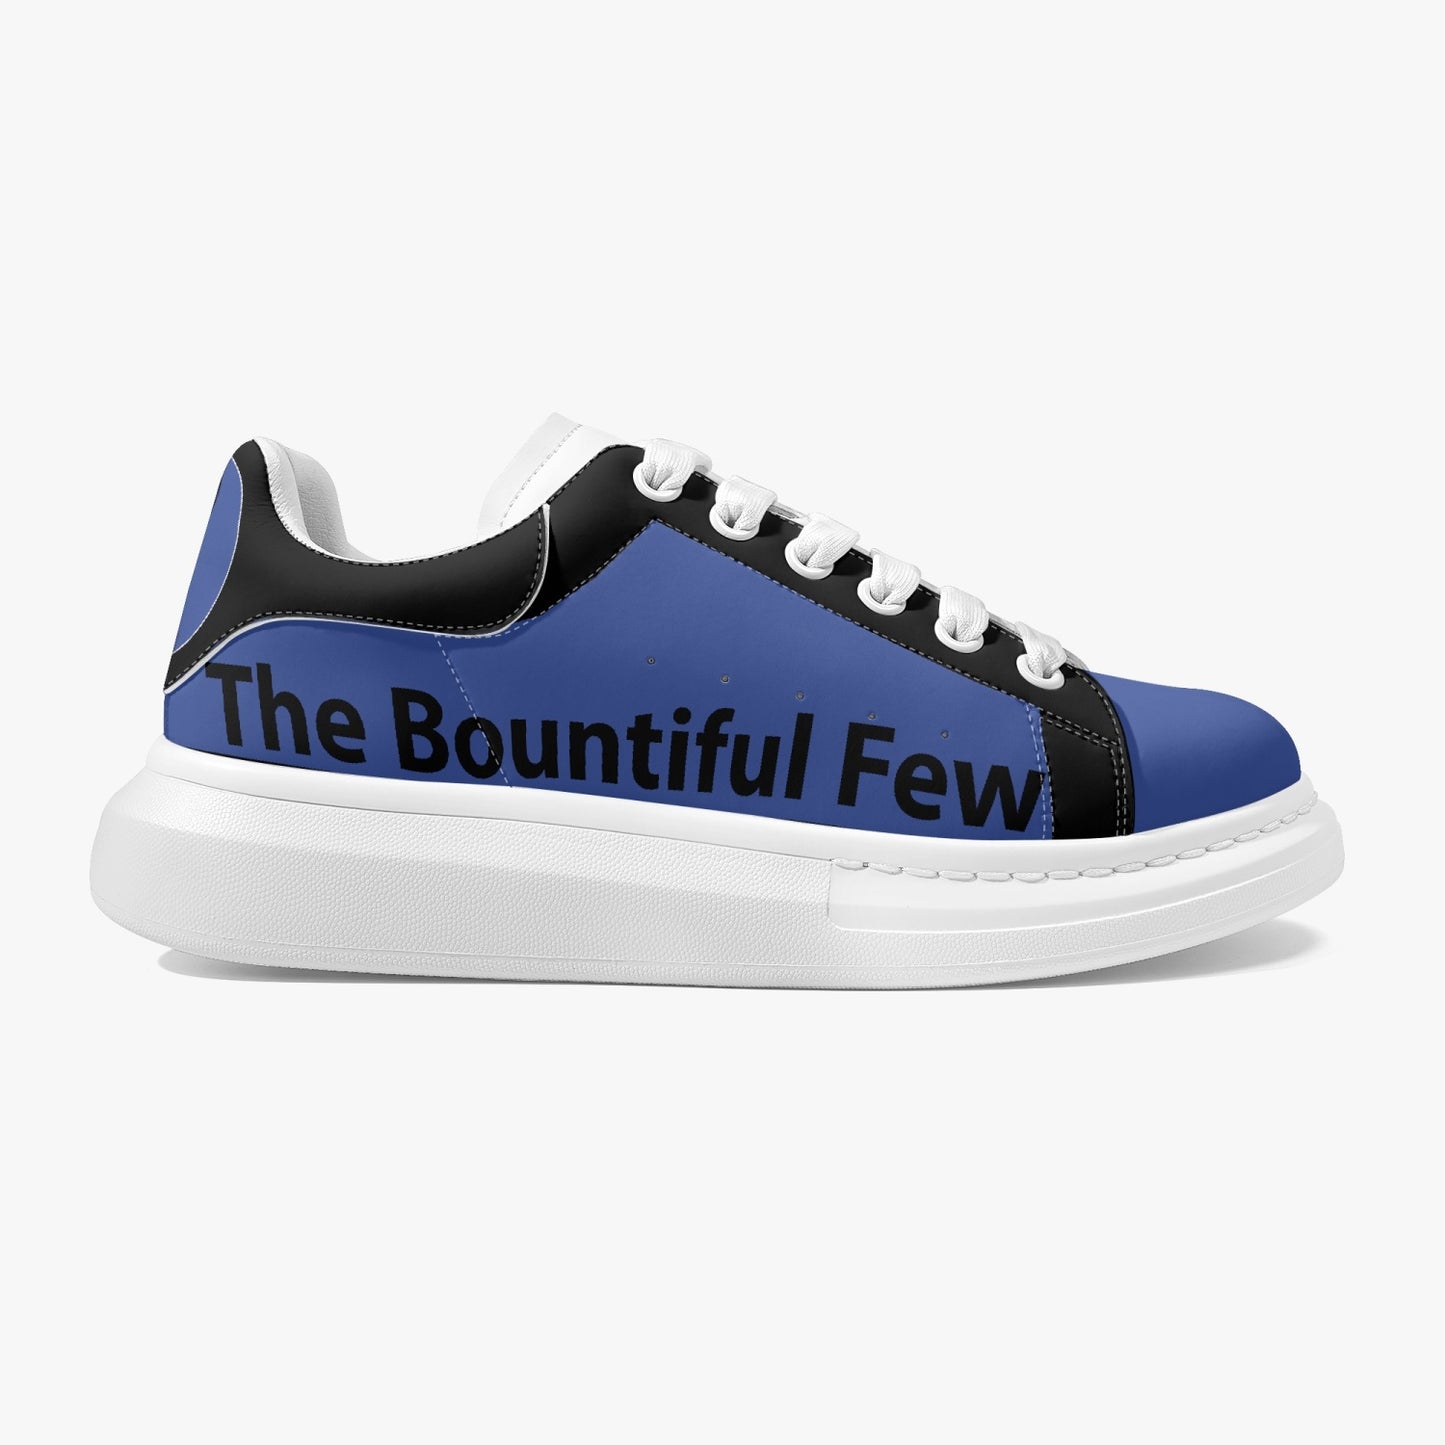 The Bountiful Few Lifestyle Shoe